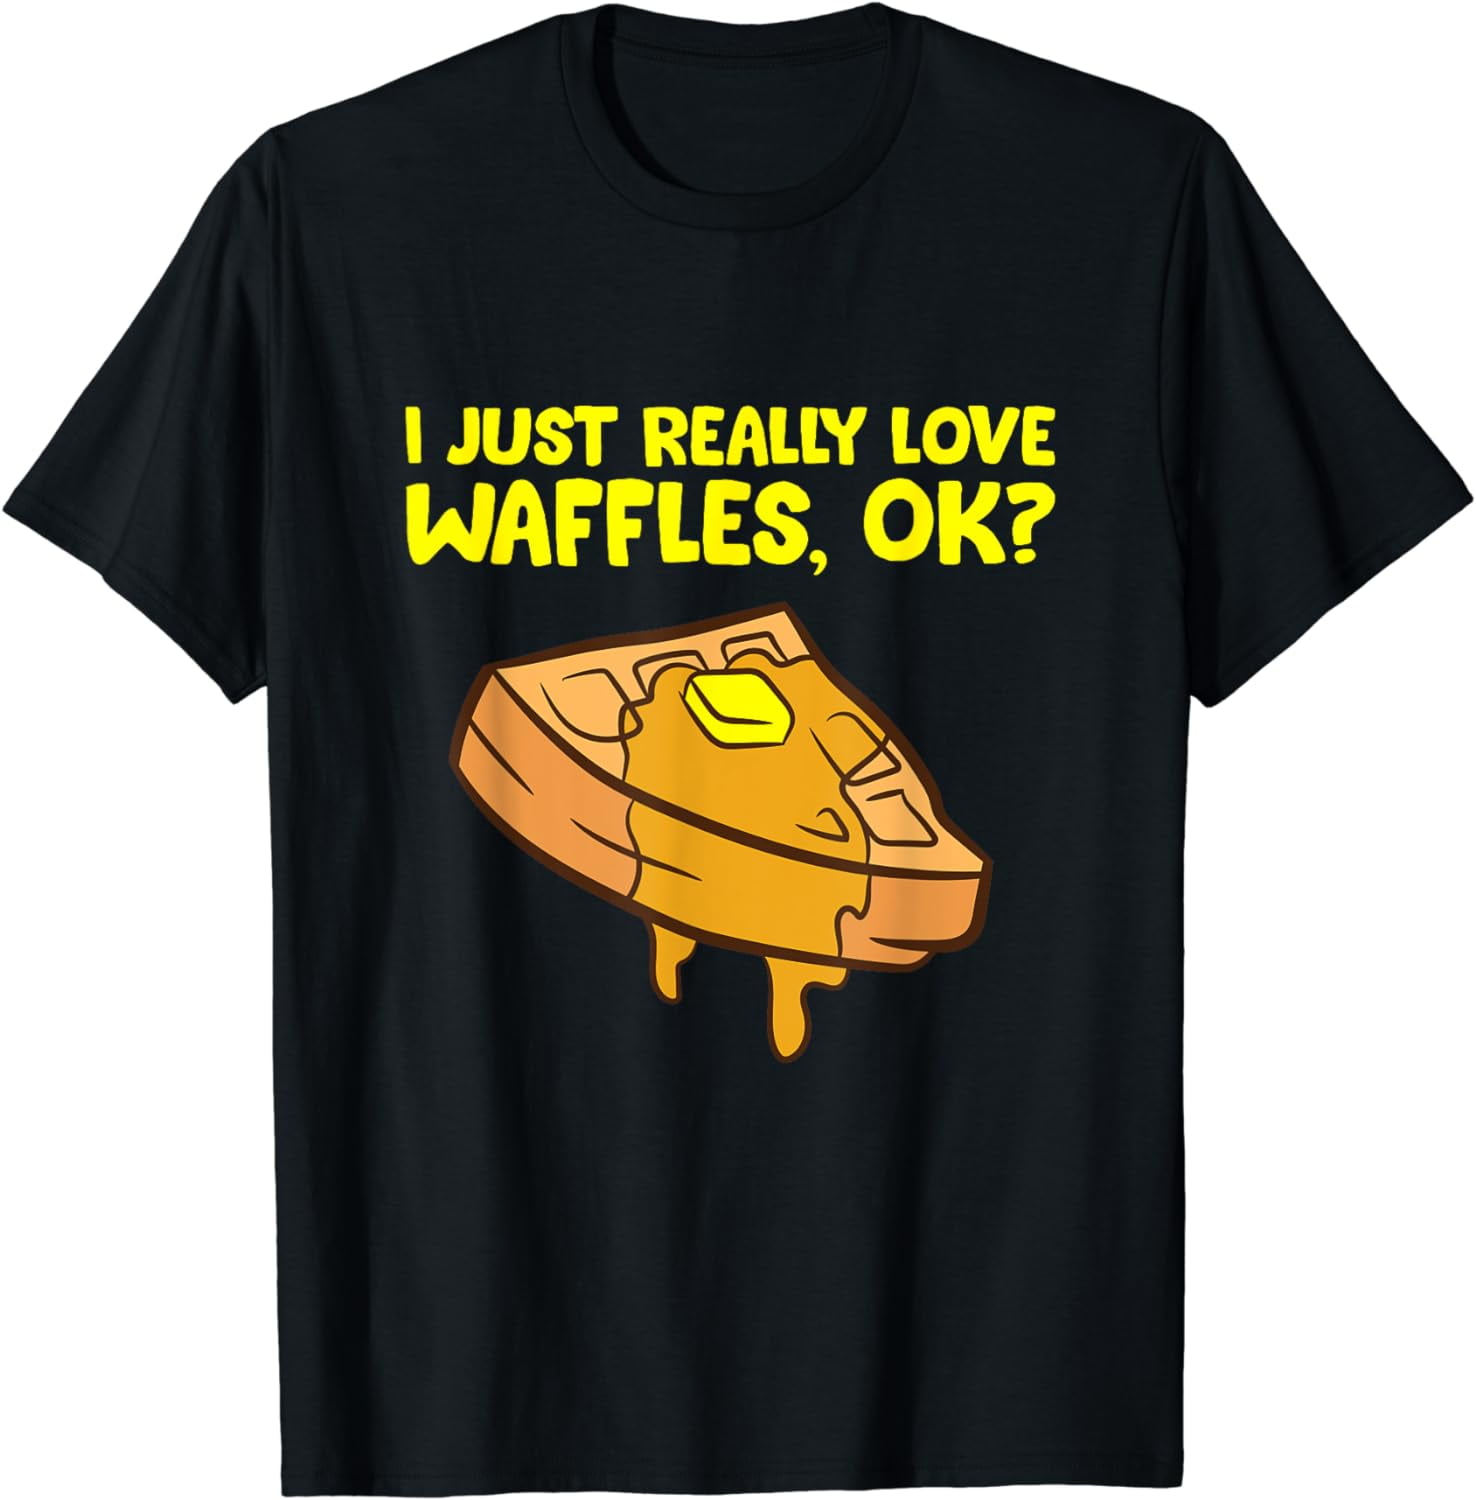 I Just Really Love Waffles, Ok? T-Shirt - Walmart.com